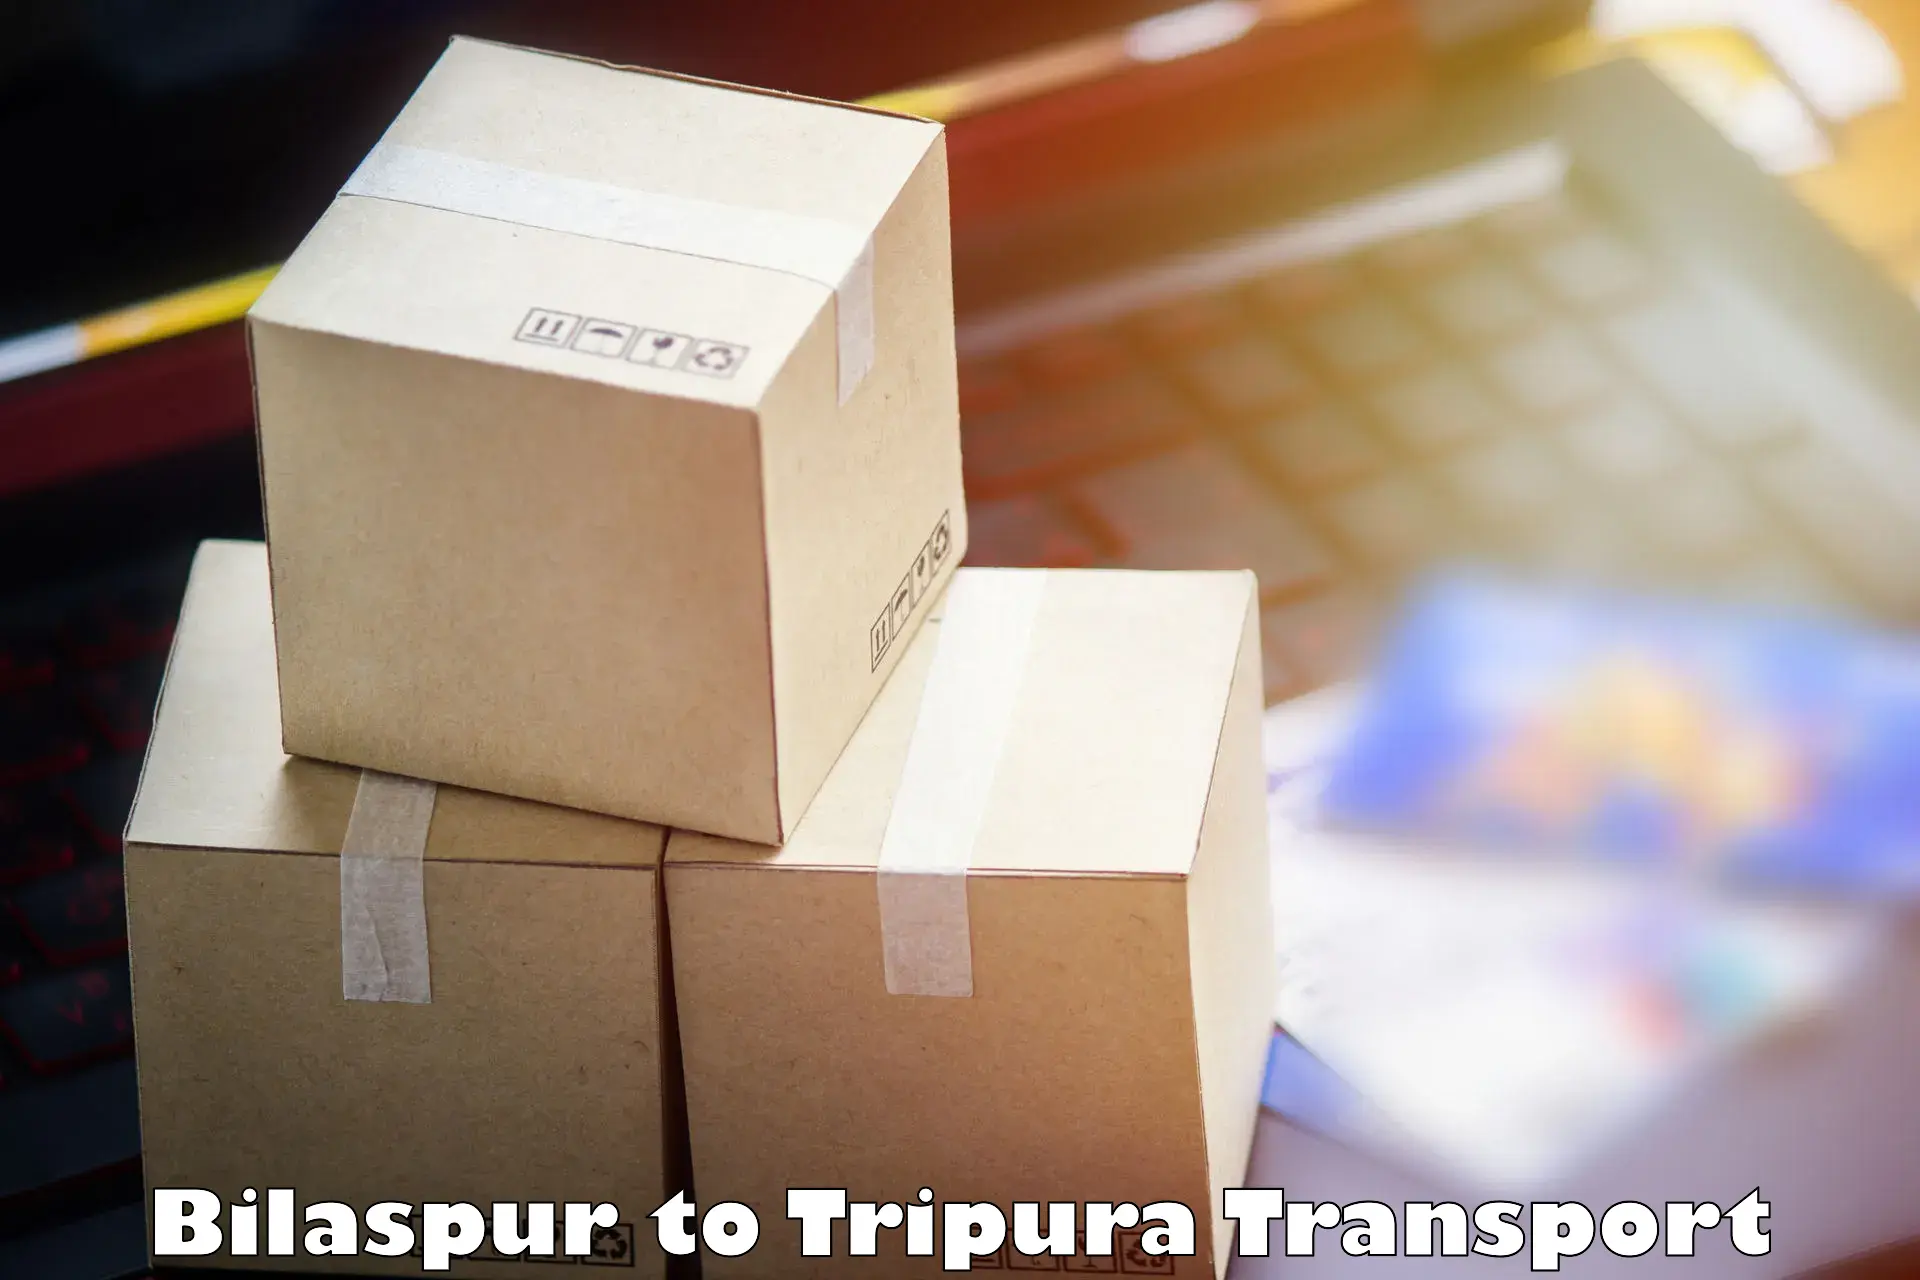 Nearby transport service Bilaspur to Udaipur Tripura